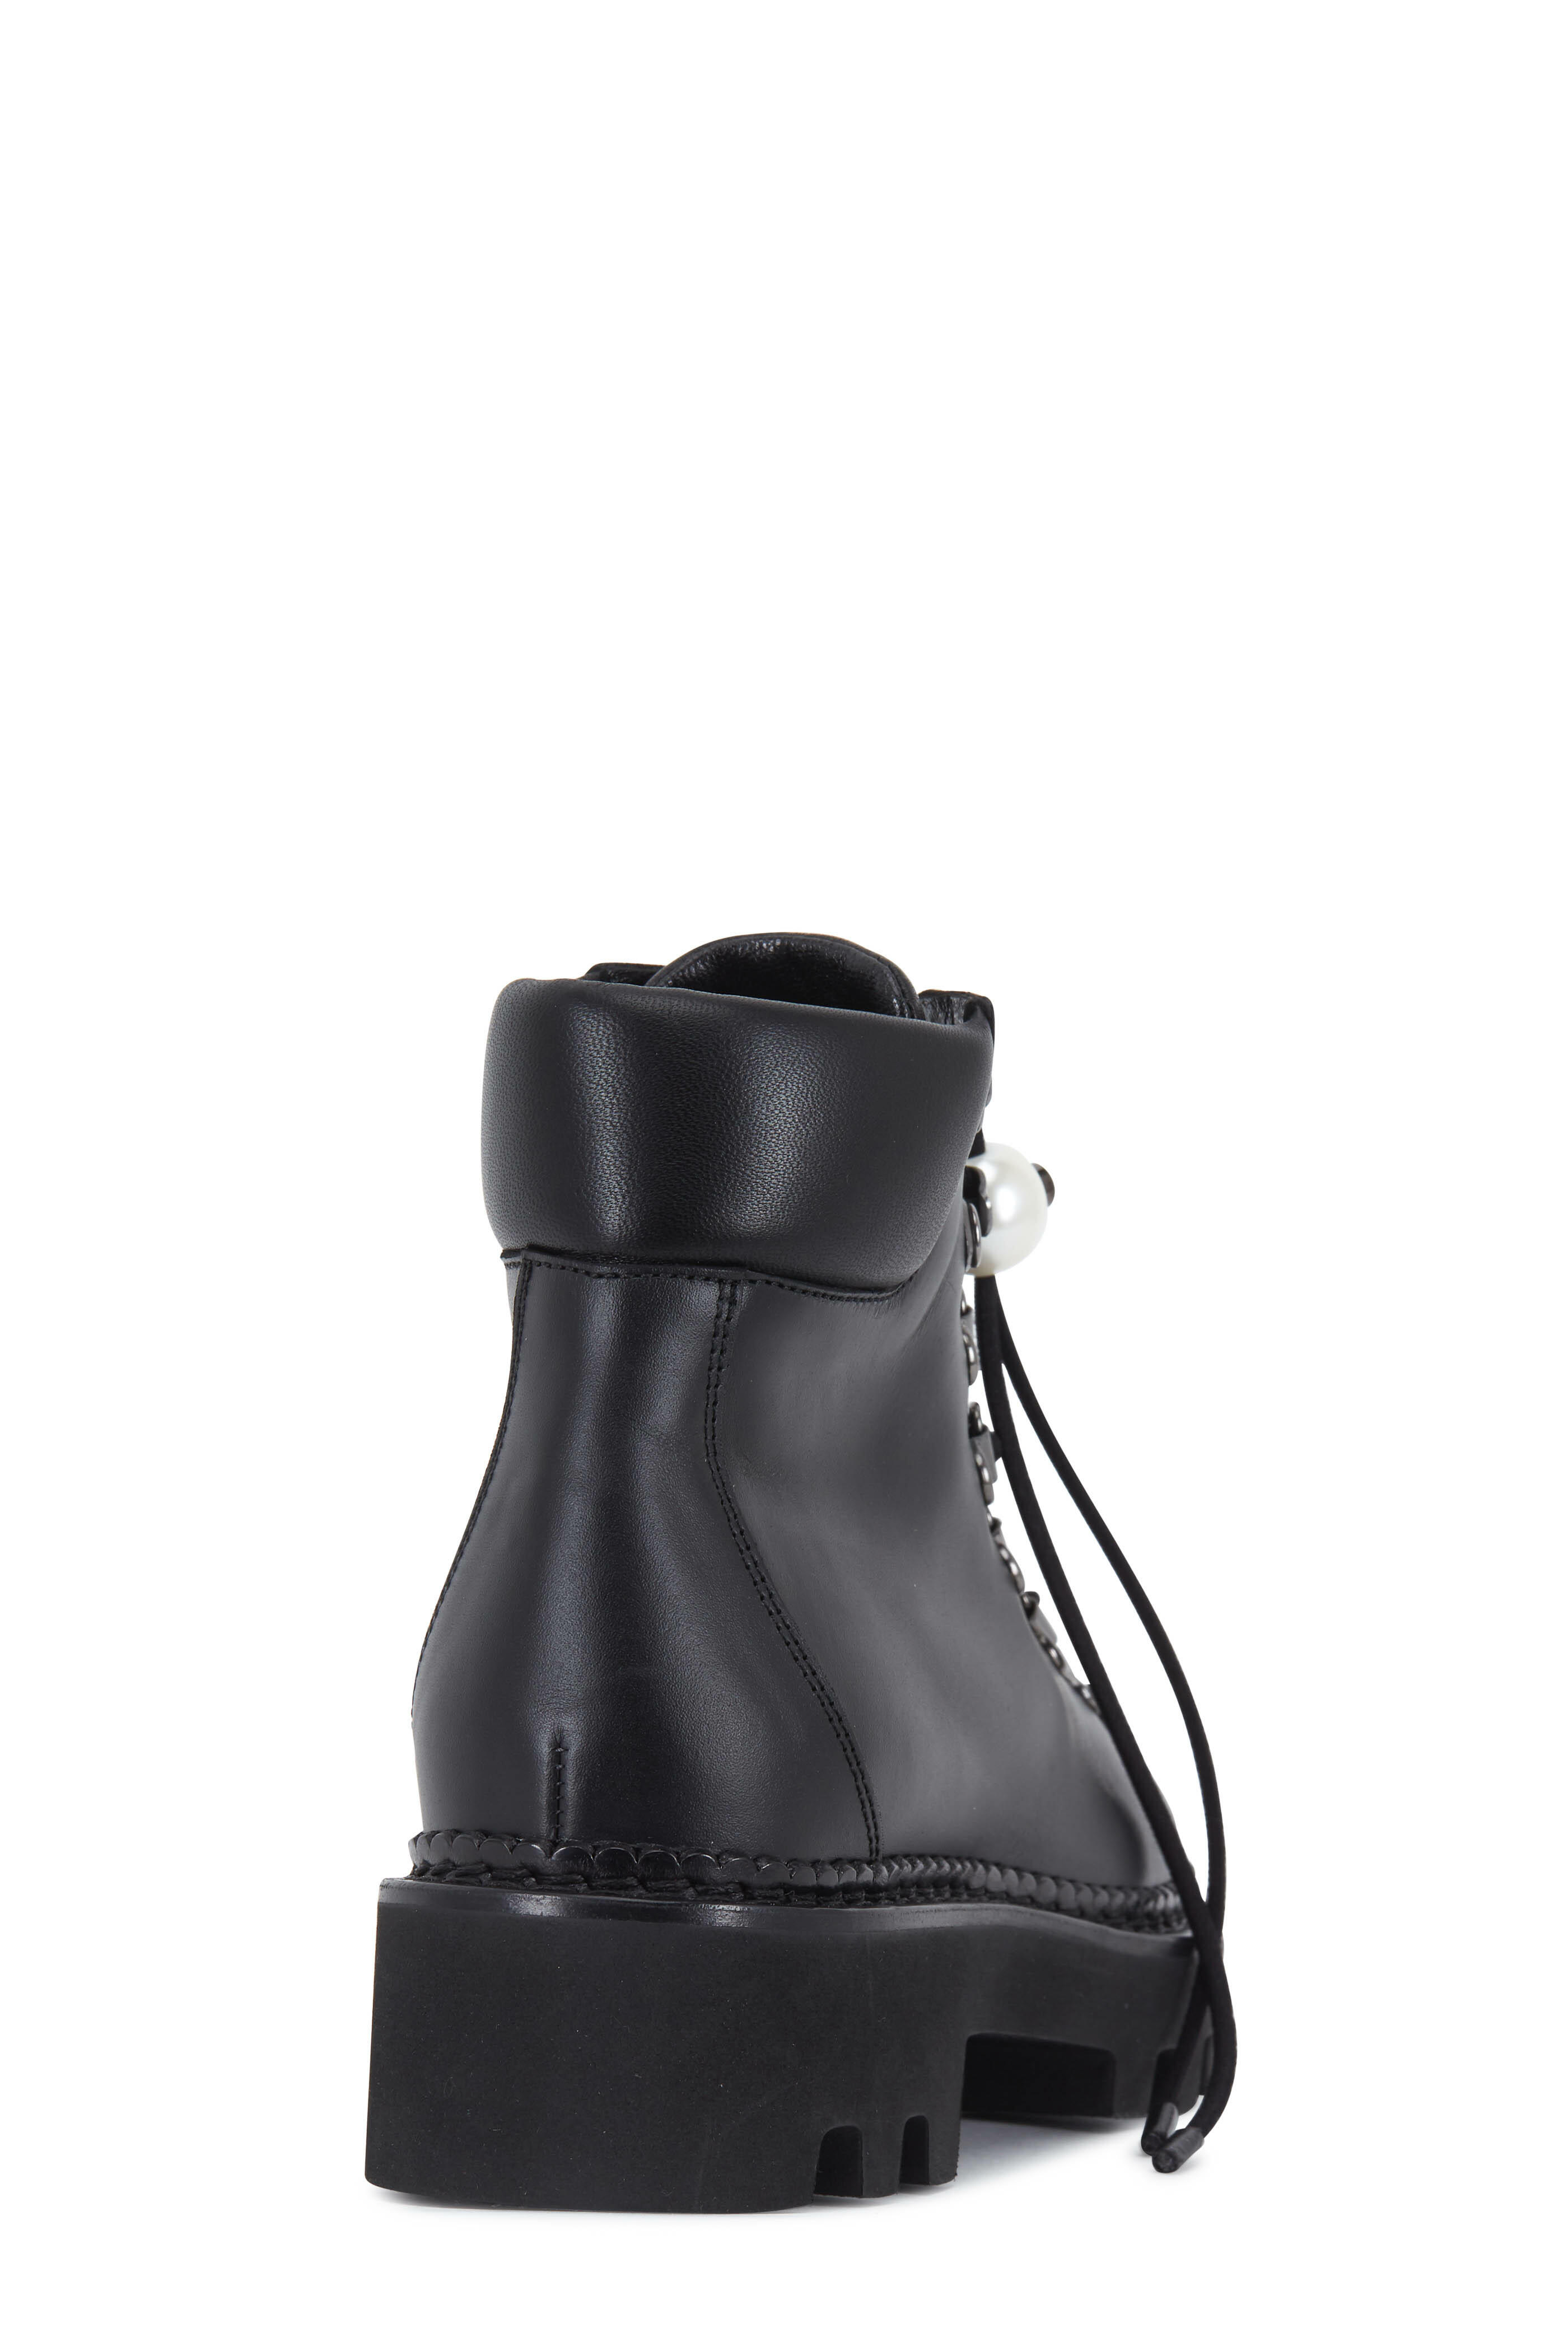 Nicholas Kirkwood Leather Combat Boots - Black Boots, Shoes